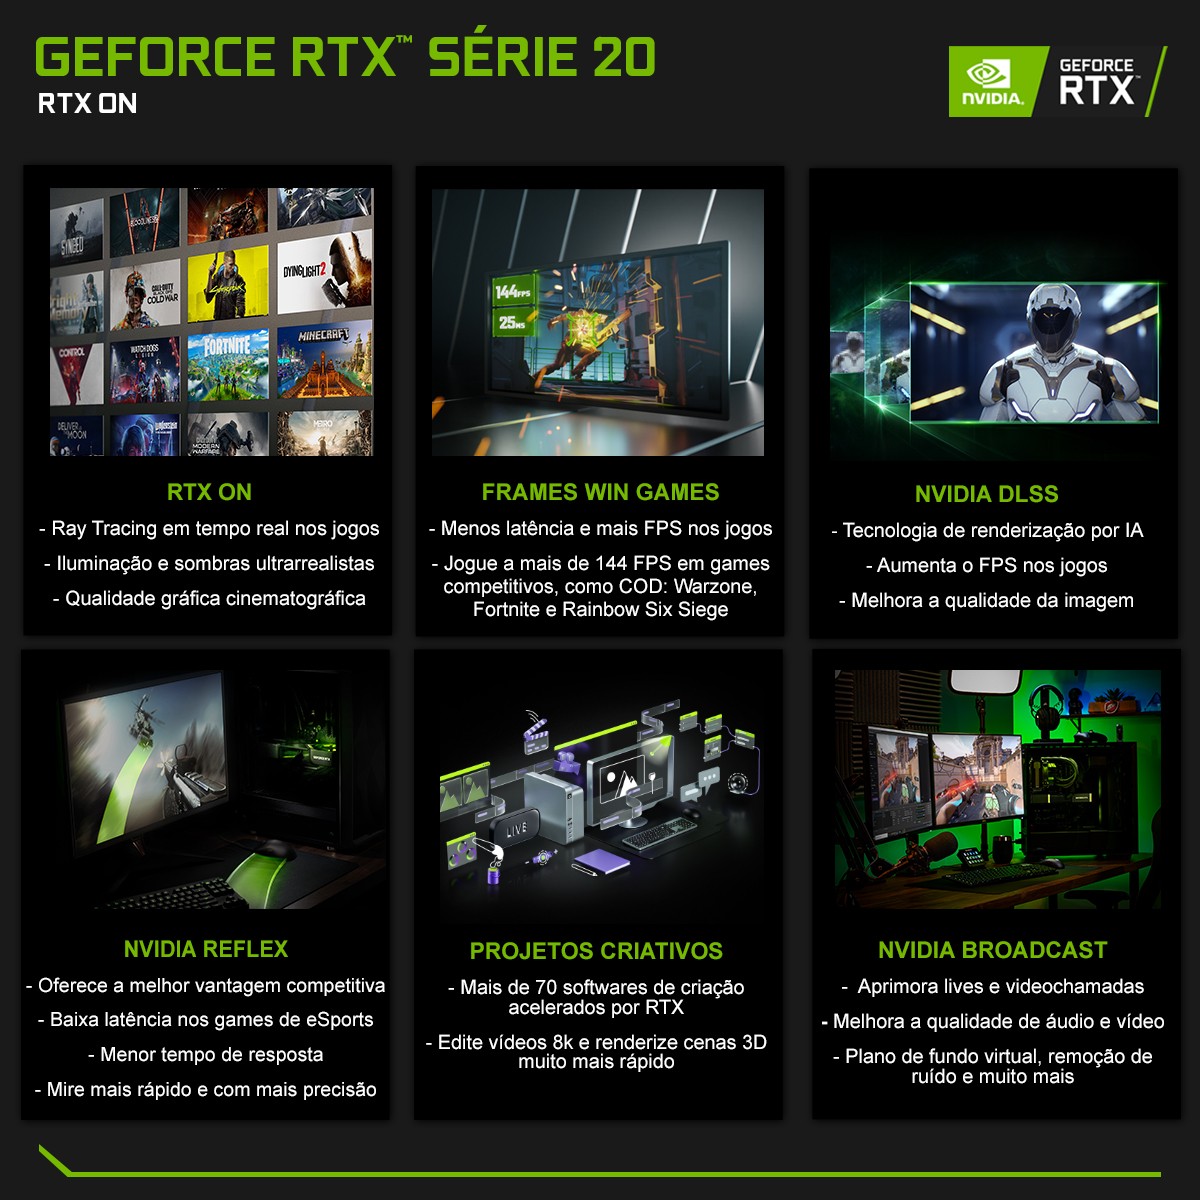 Placa de Vídeo Gigabyte GeForce RTX 2080 Super Windforce OC, 8GB GDDR6, 256Bit